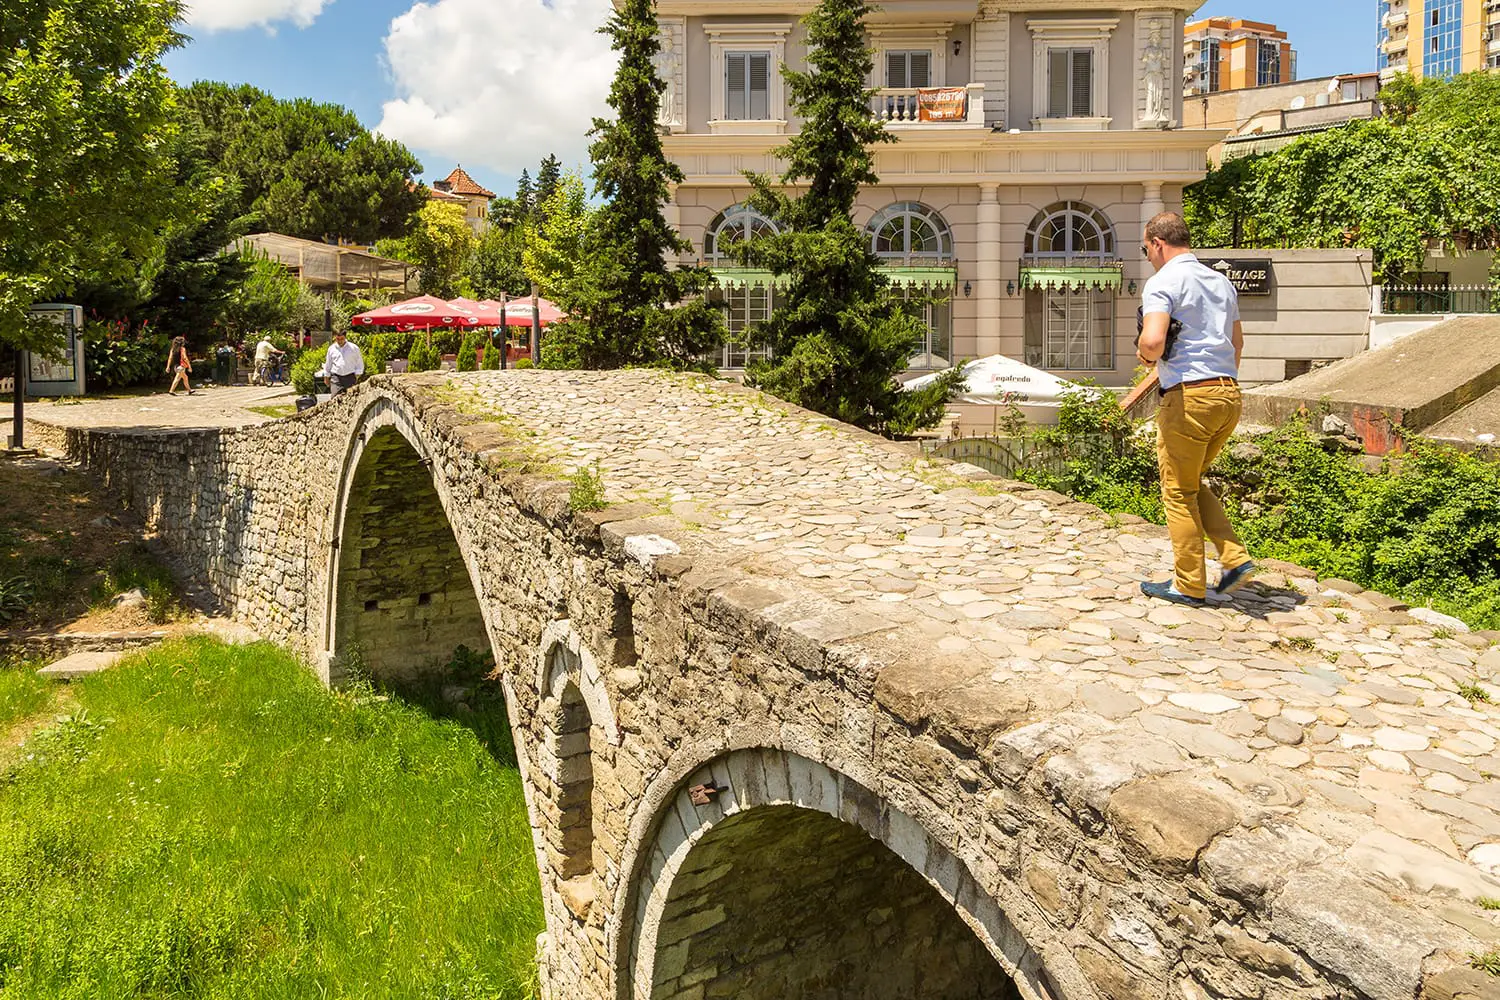 The Tanners' bridge, or Tabak bridge, a ottoman stone arch bridge built in the 18th century. It is located in Tirana's modern center.